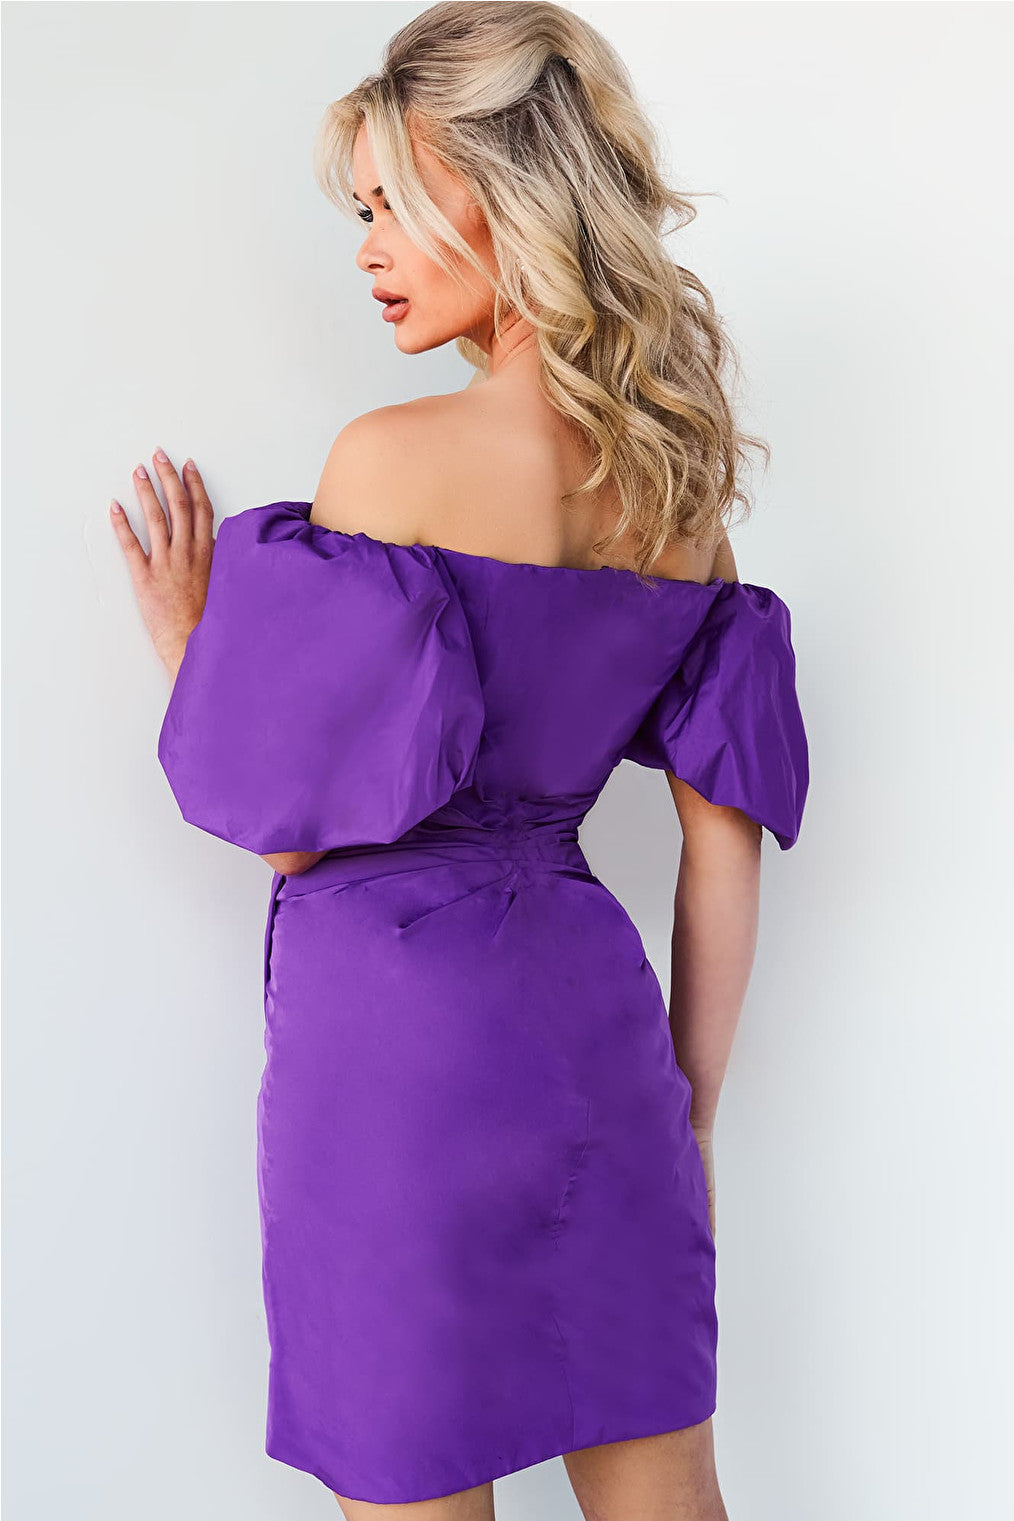 Purple short sleeve cocktail dress 09476